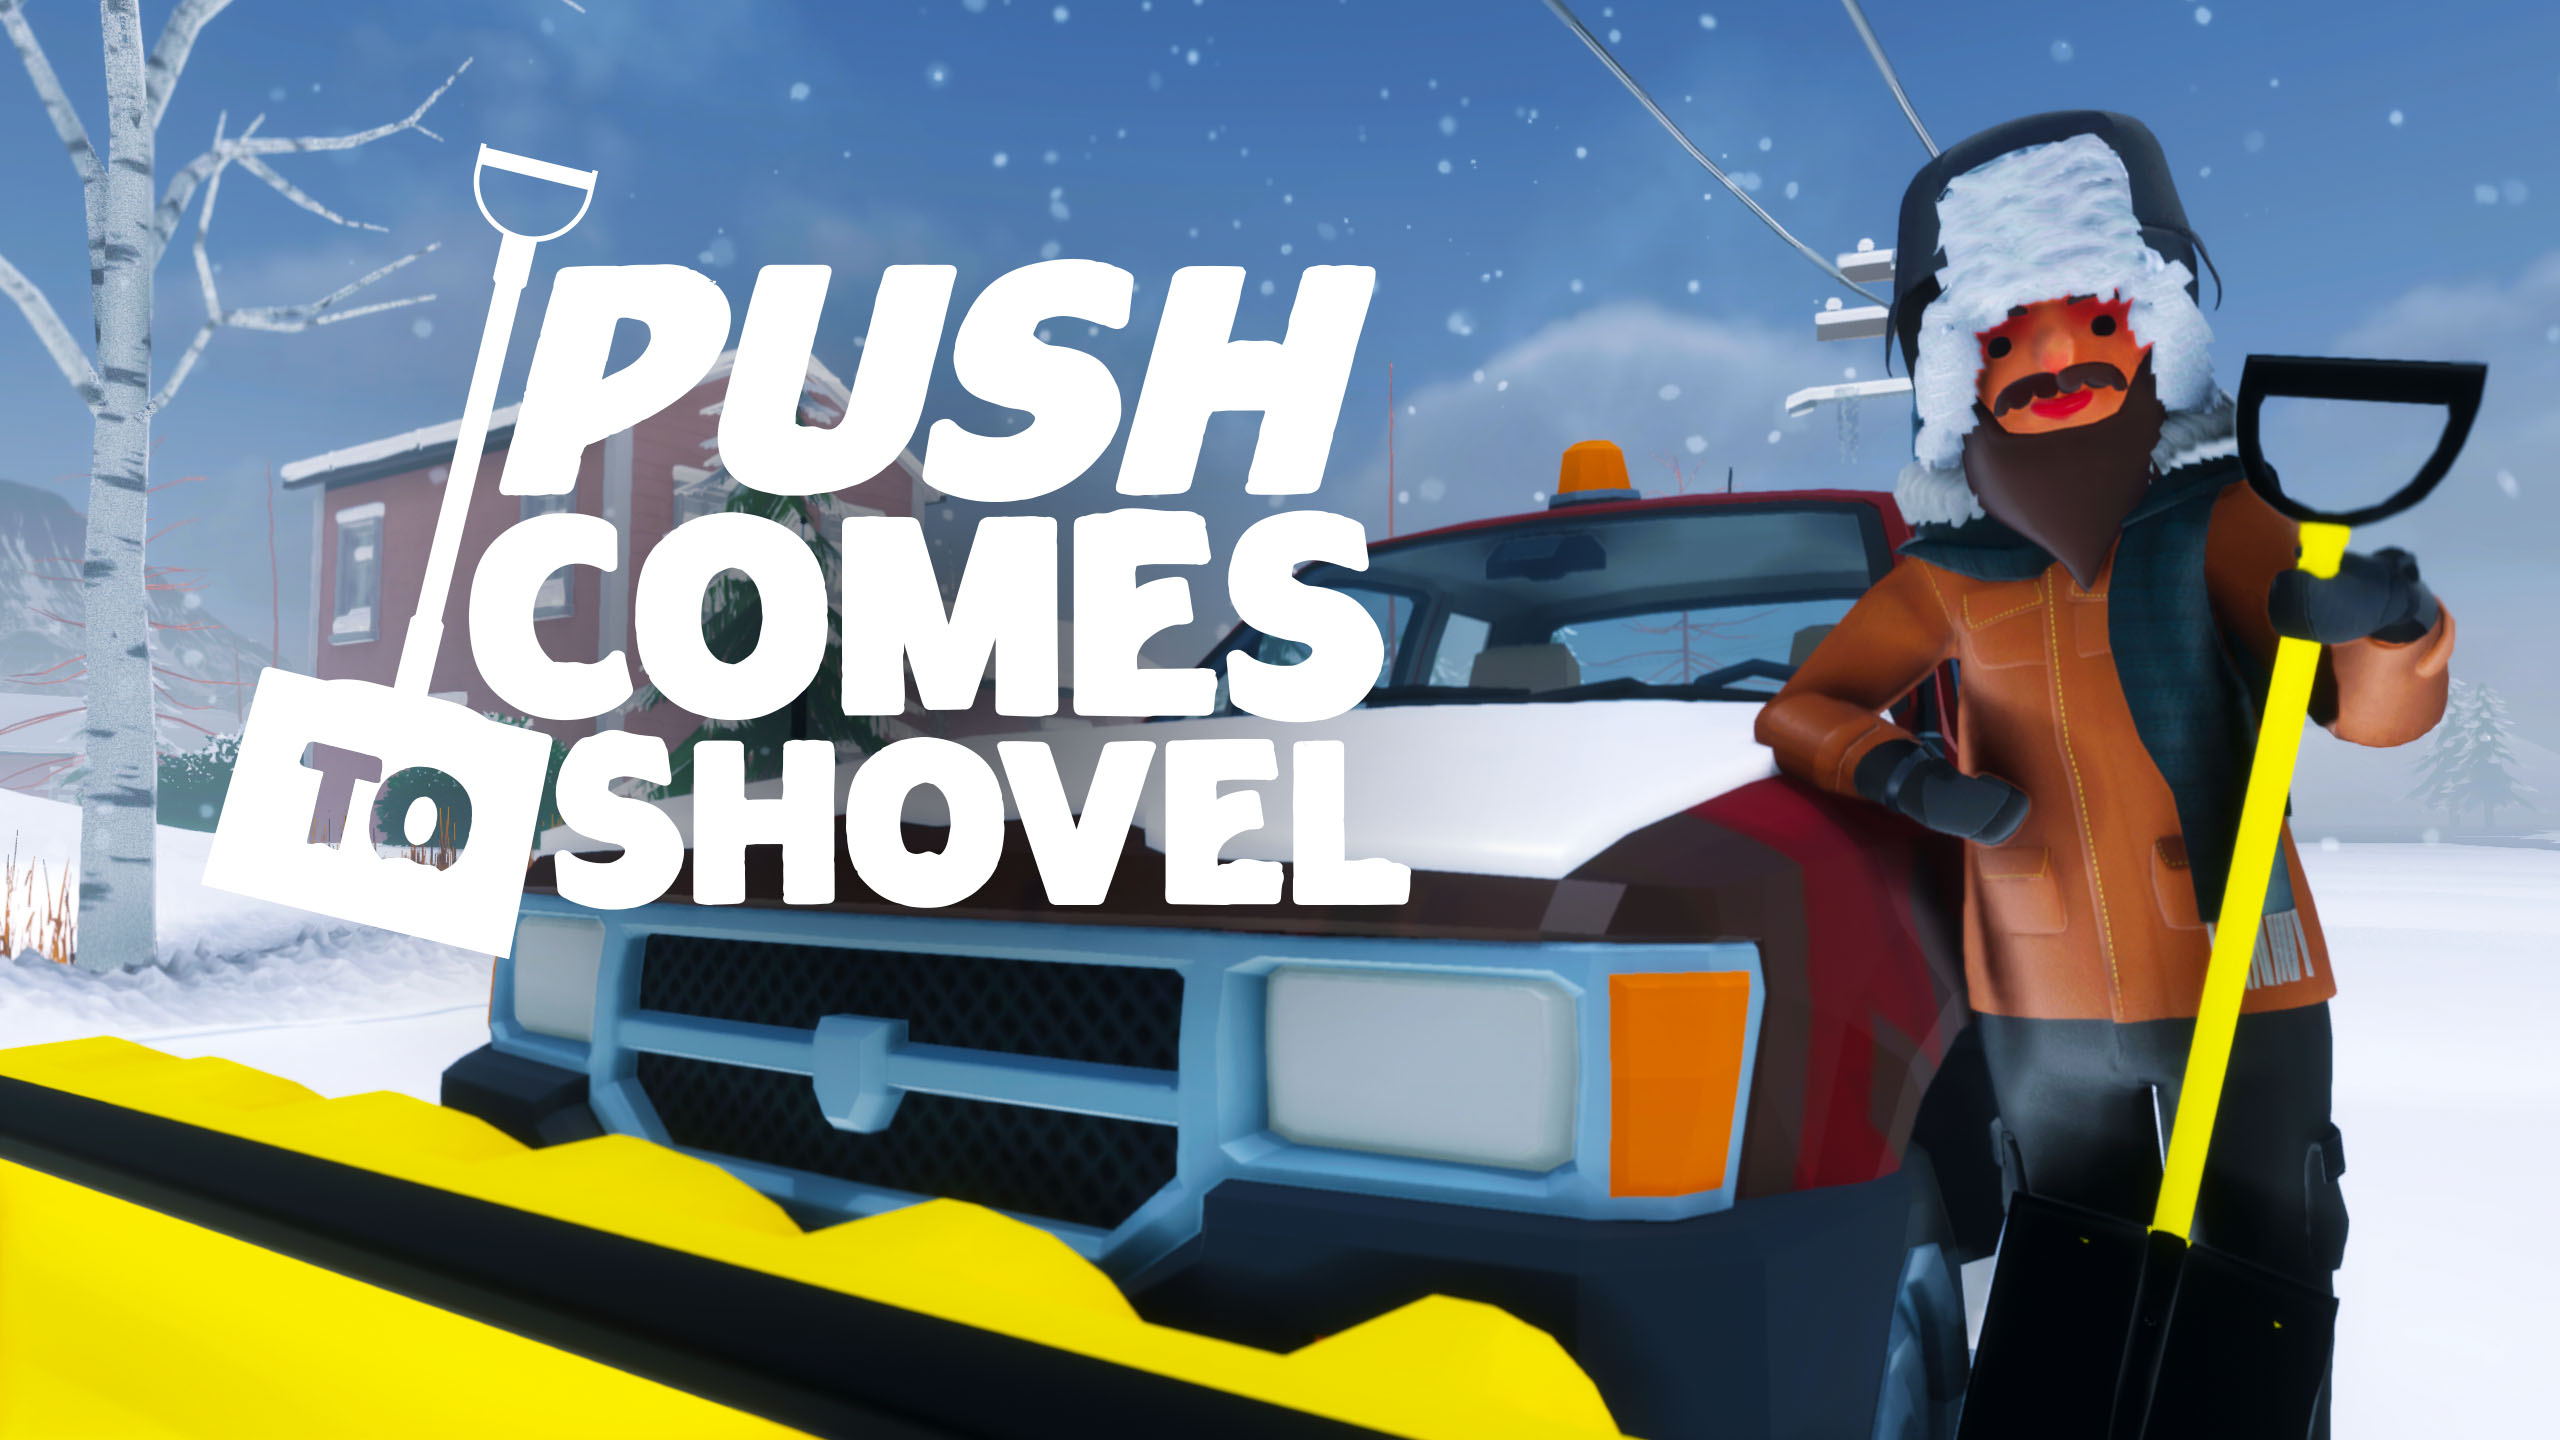 push comes to shovel logo background